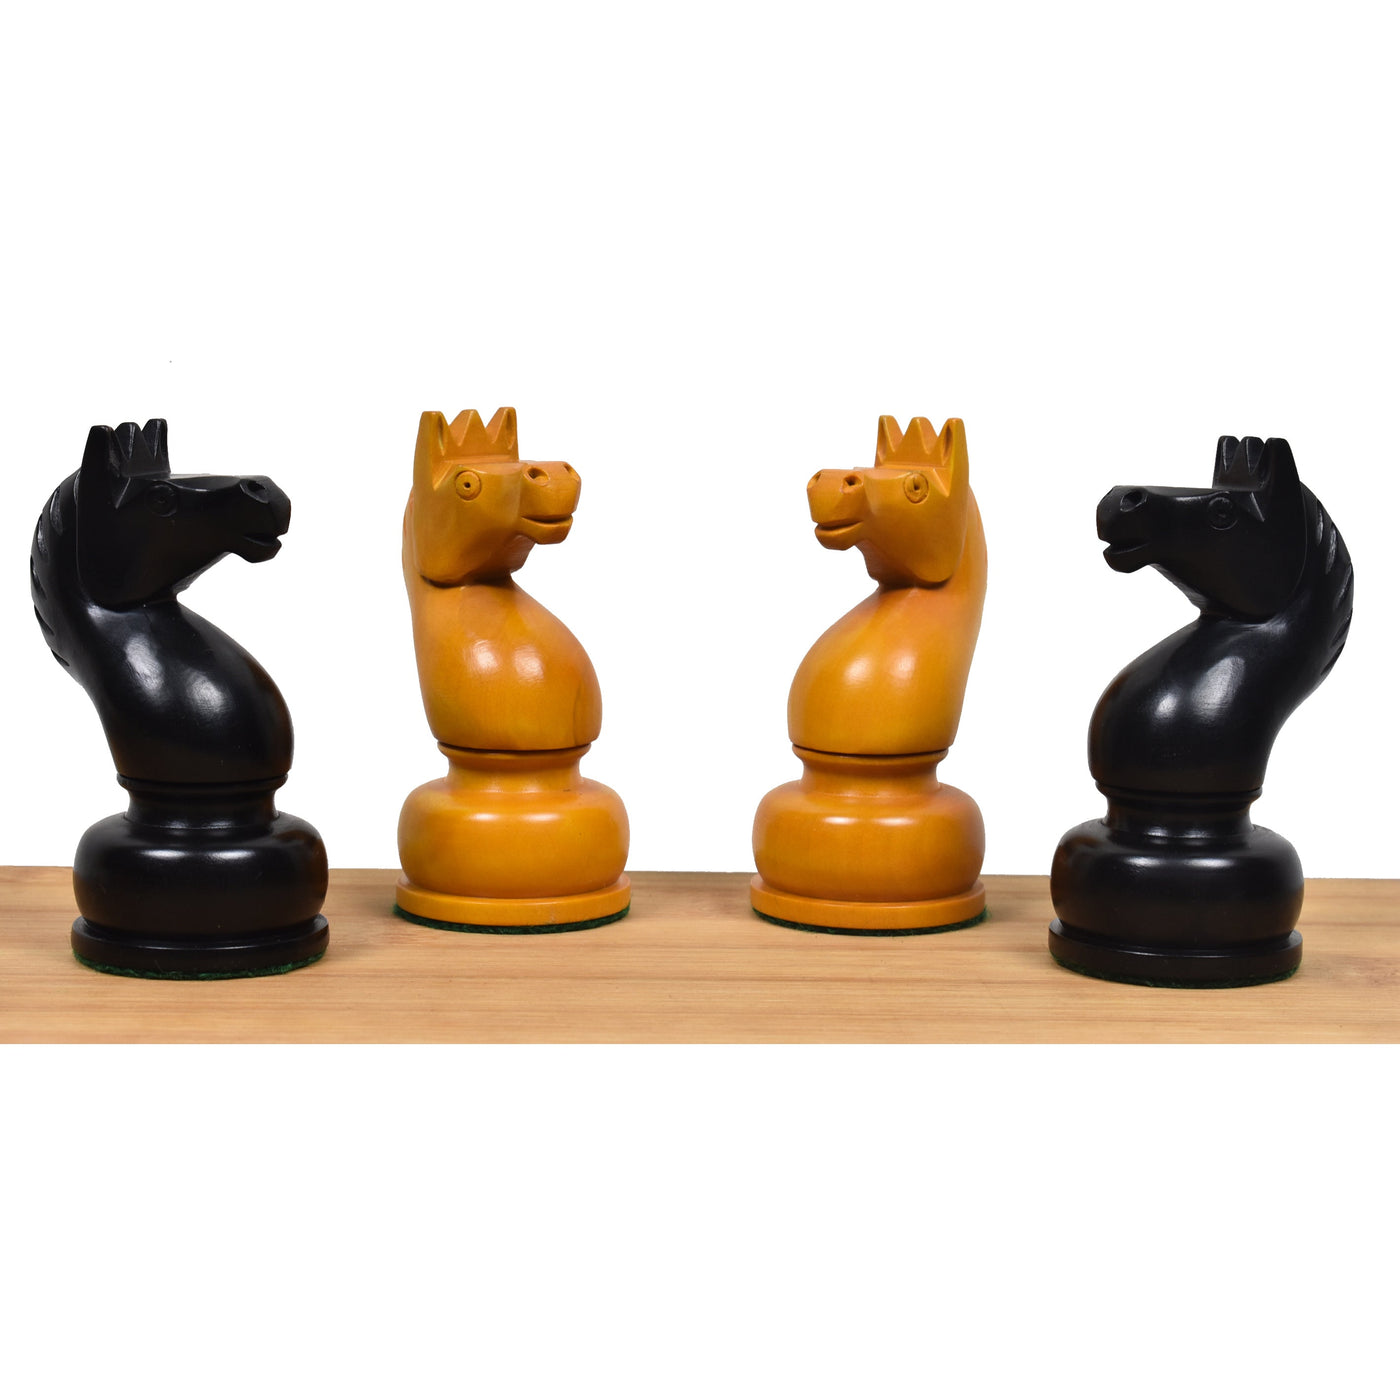 1960's Soviet Championship Tal Chess Pieces | Royalchessmall | Wood Chess Sets